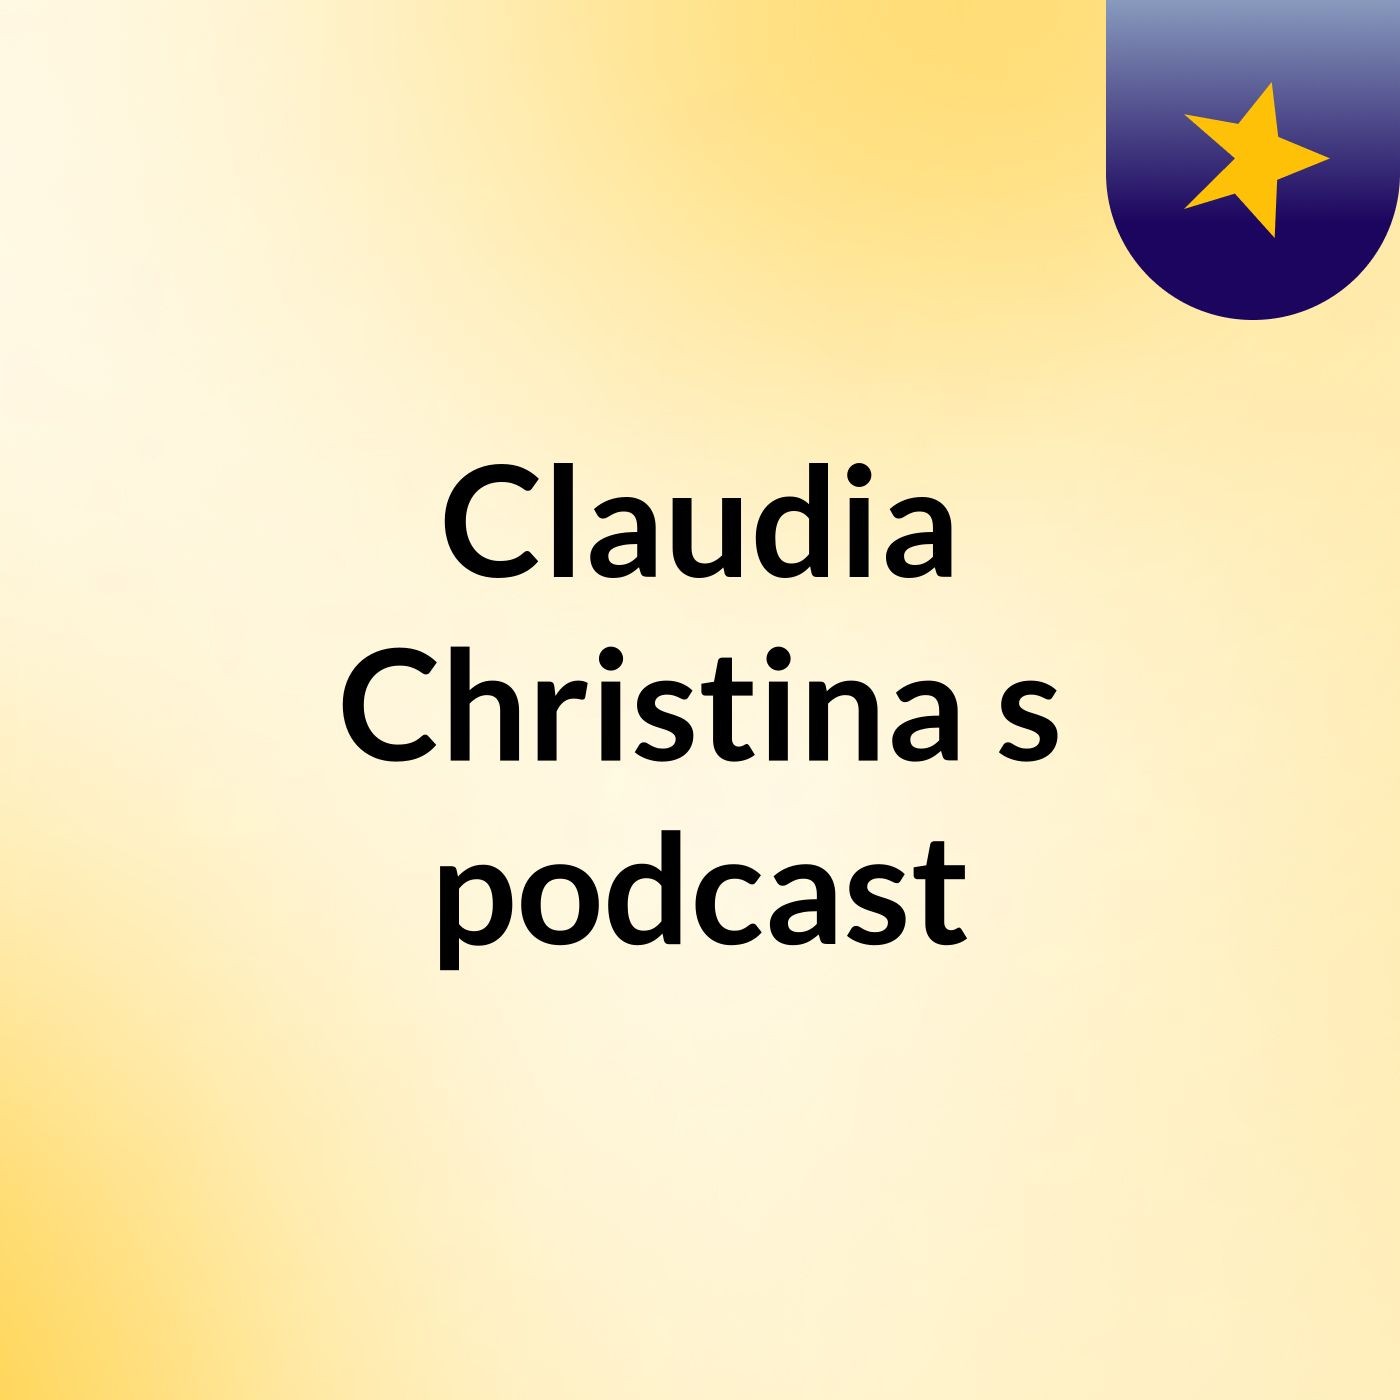 Claudia Christina's podcast